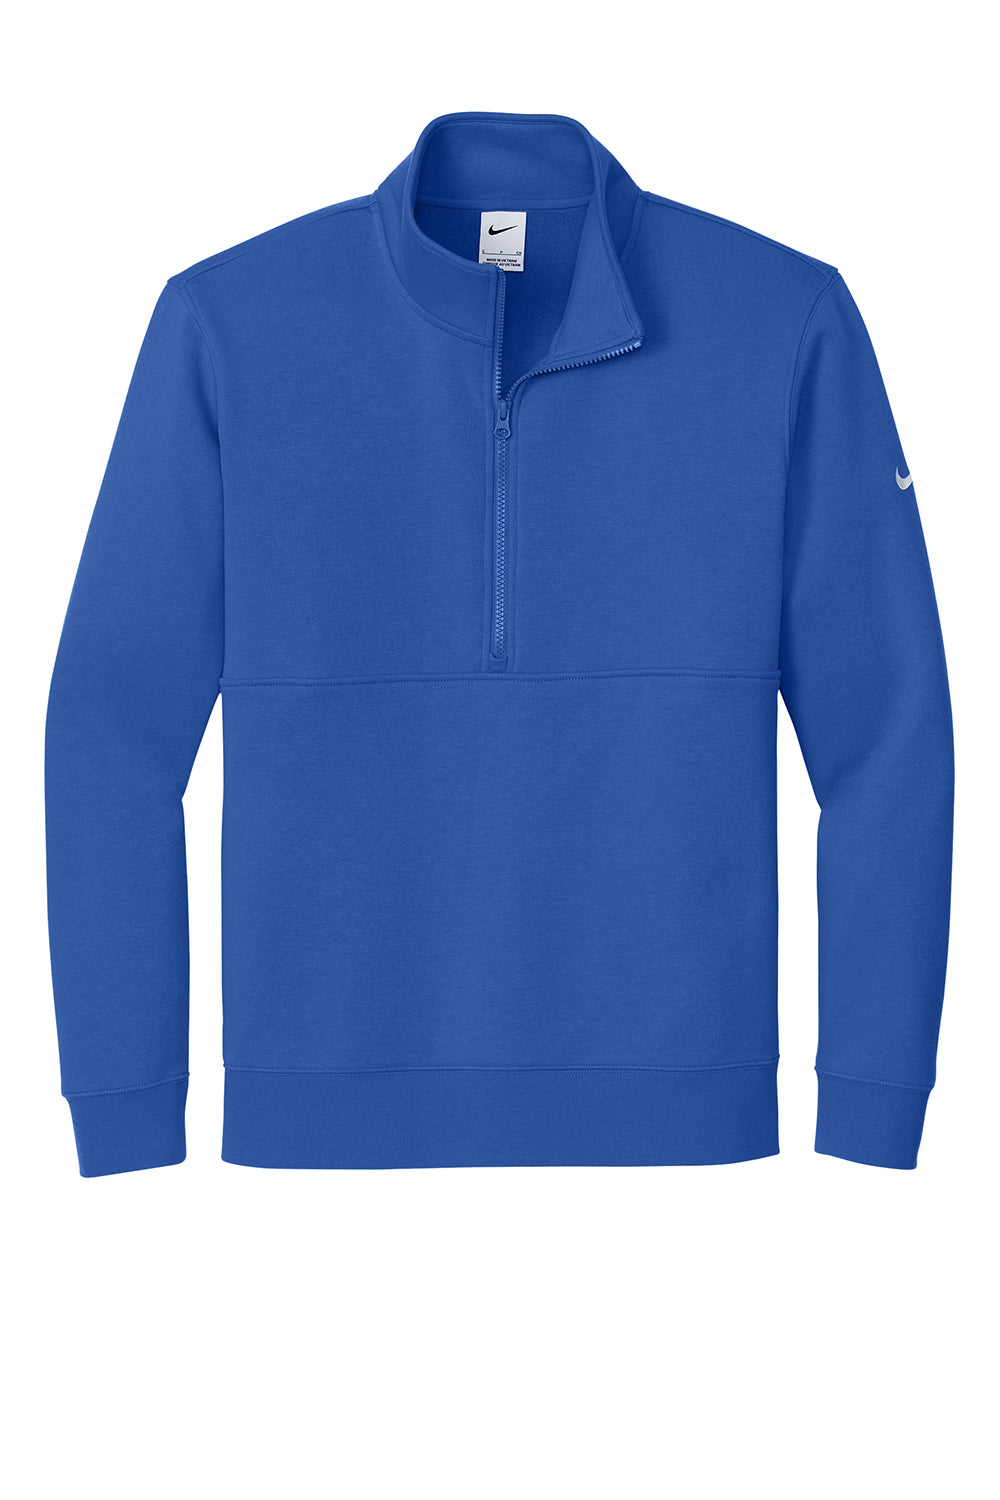 Nike NKDX6718 Mens Club Fleece 1/4 Zip Sweatshirt Game Royal Blue Flat Front